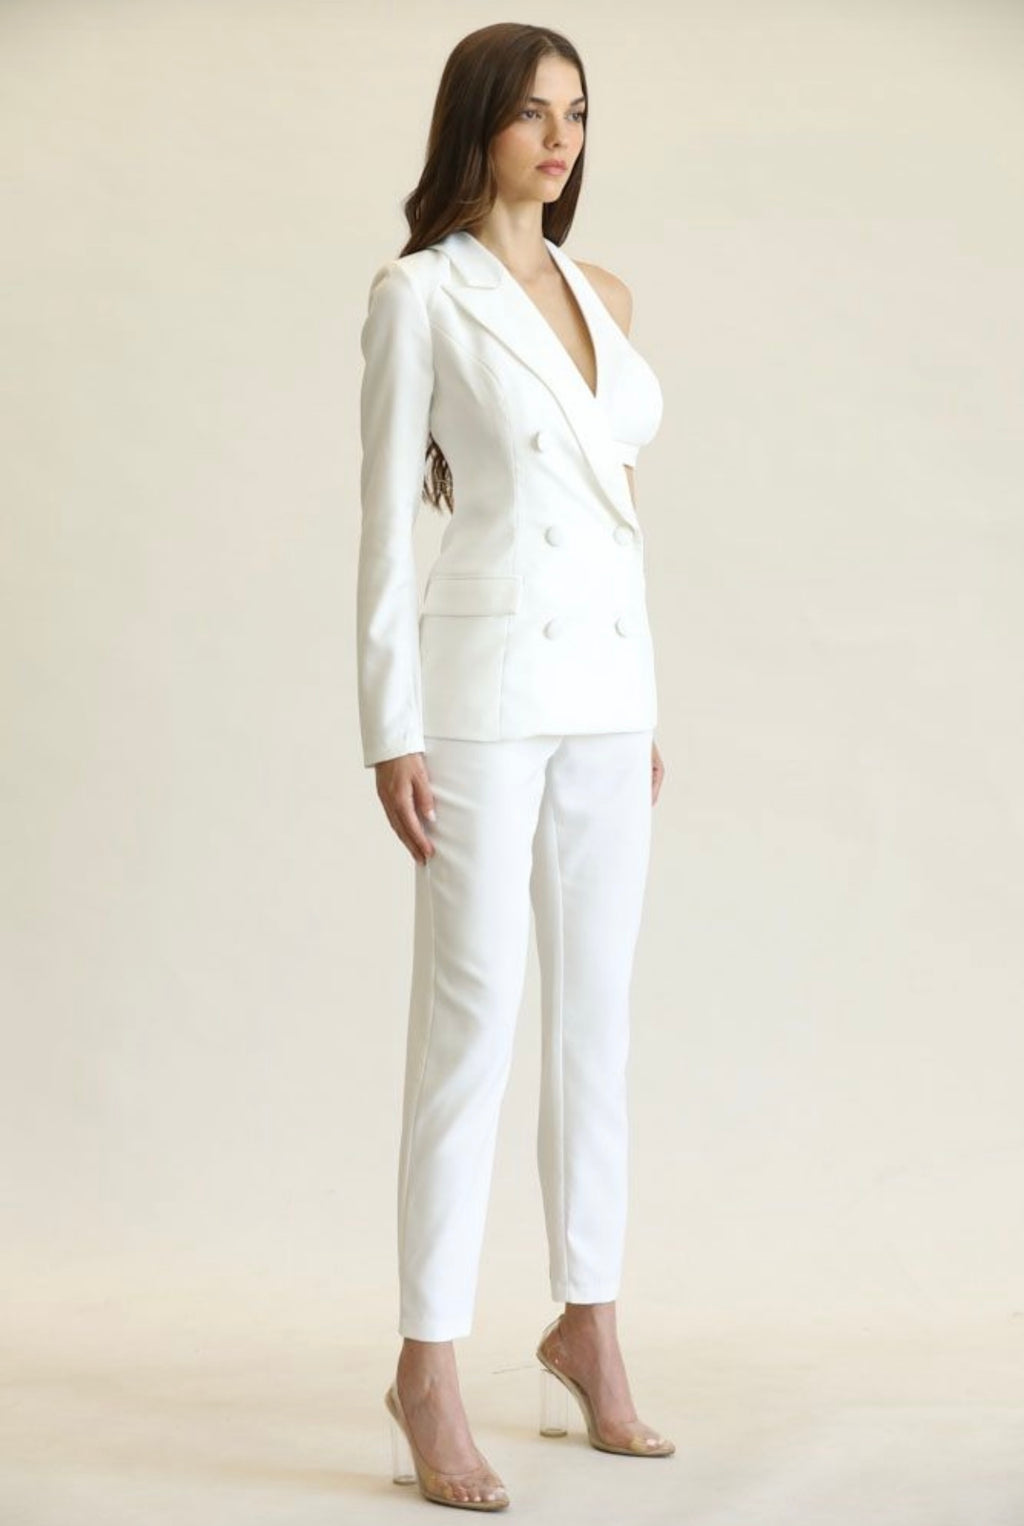 Choima white suit